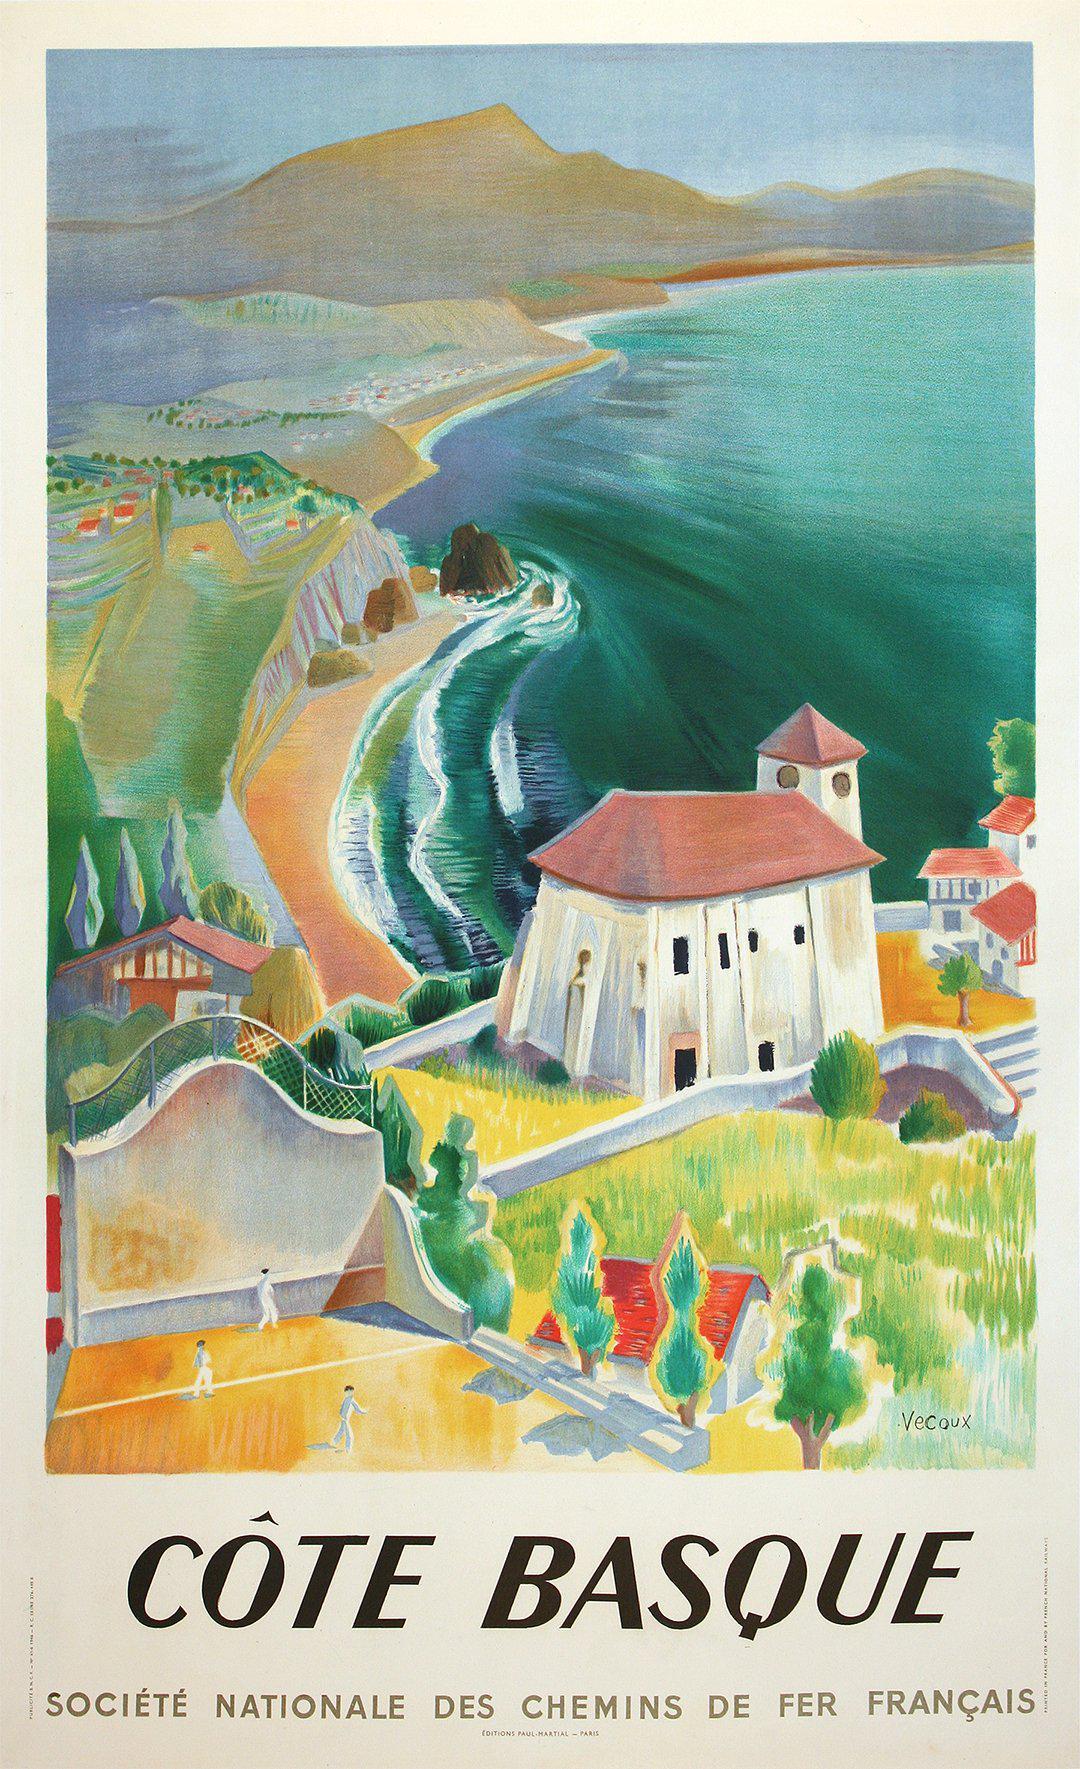 Cote Basque Original Vintage Poster for SNCF by Vecoux 1946